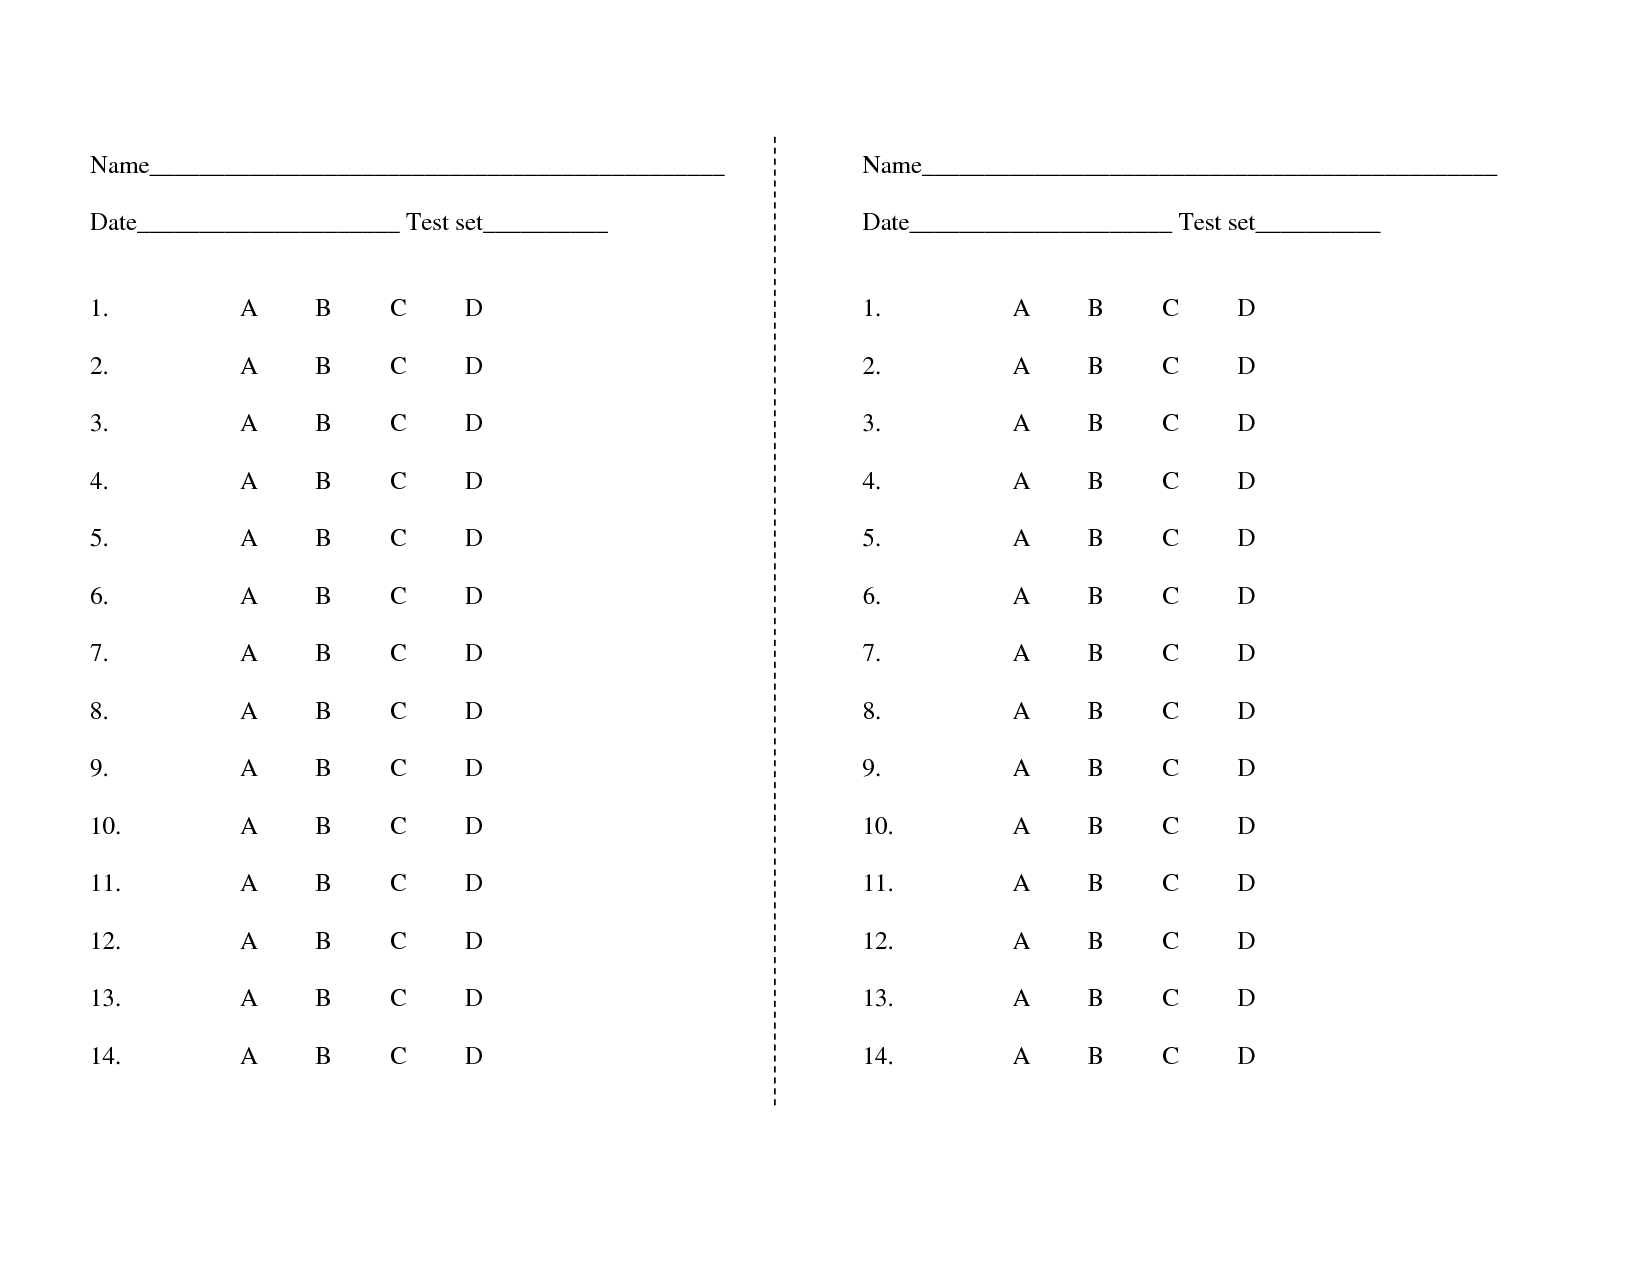 blank-answer-sheet-template-22-2200